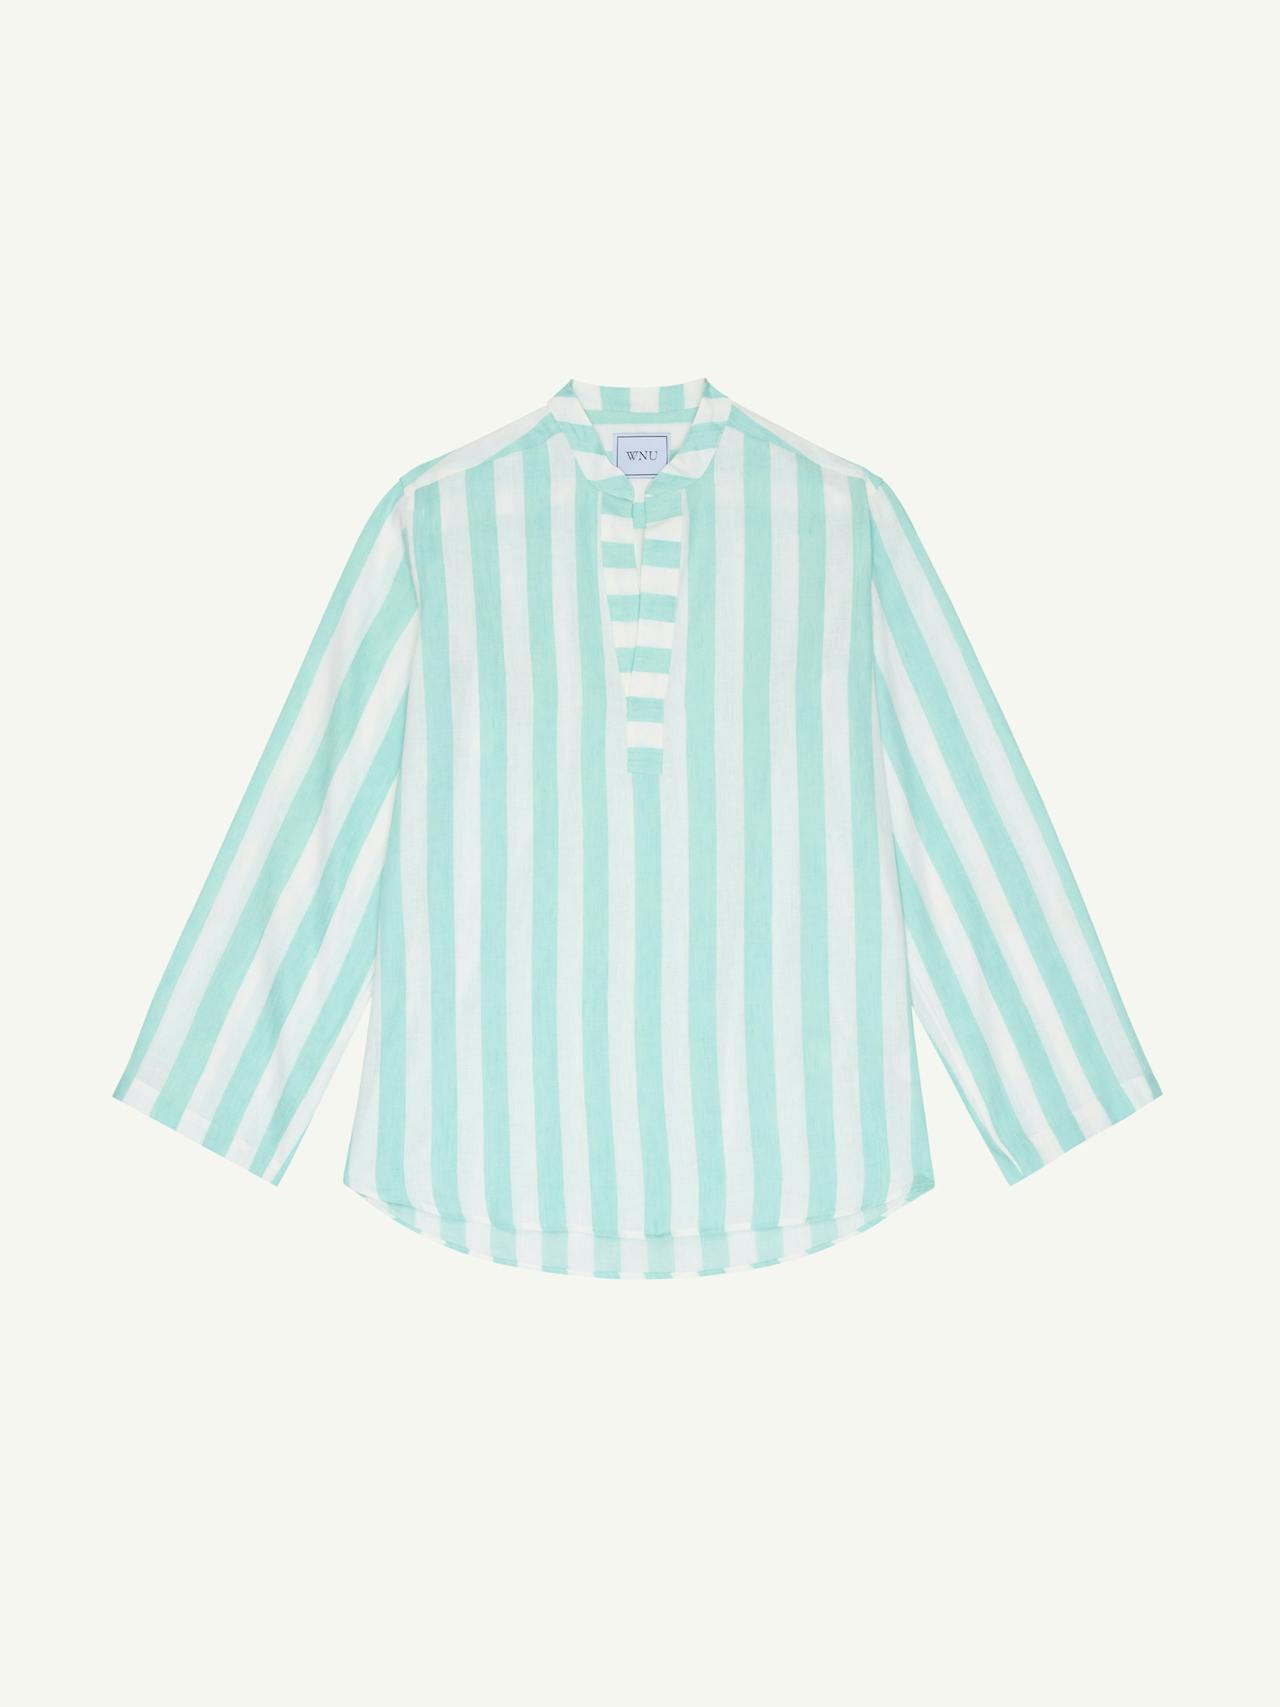 Ada: Weave, Mint stripe shirt